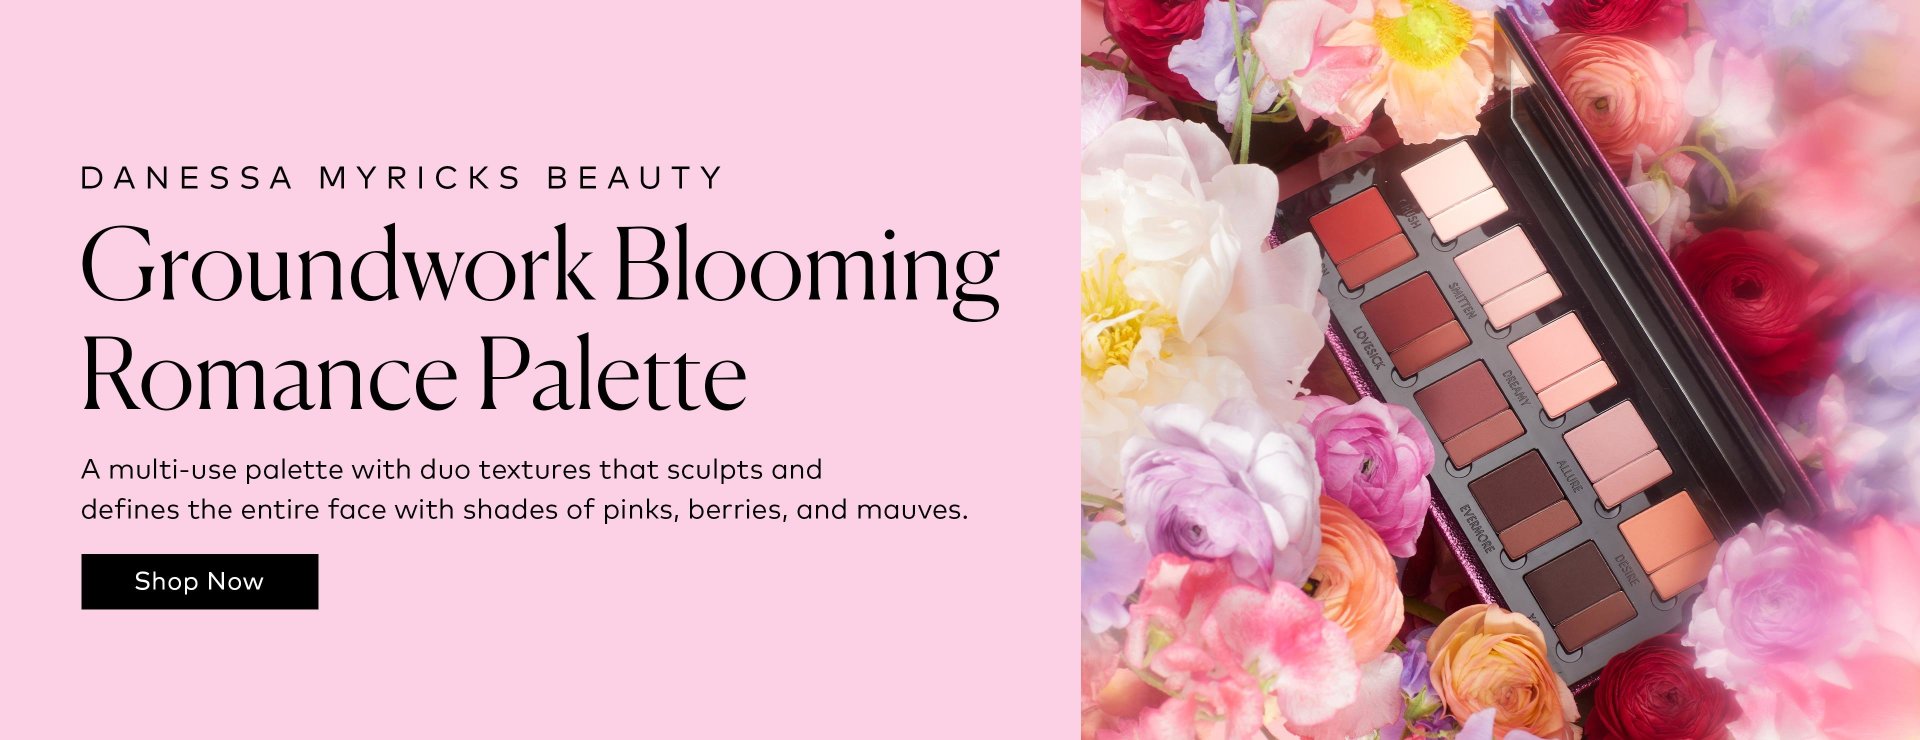 Shop the Danessa Myricks Beauty Groundwork Blooming Romance Palette on Beautylish.com! 